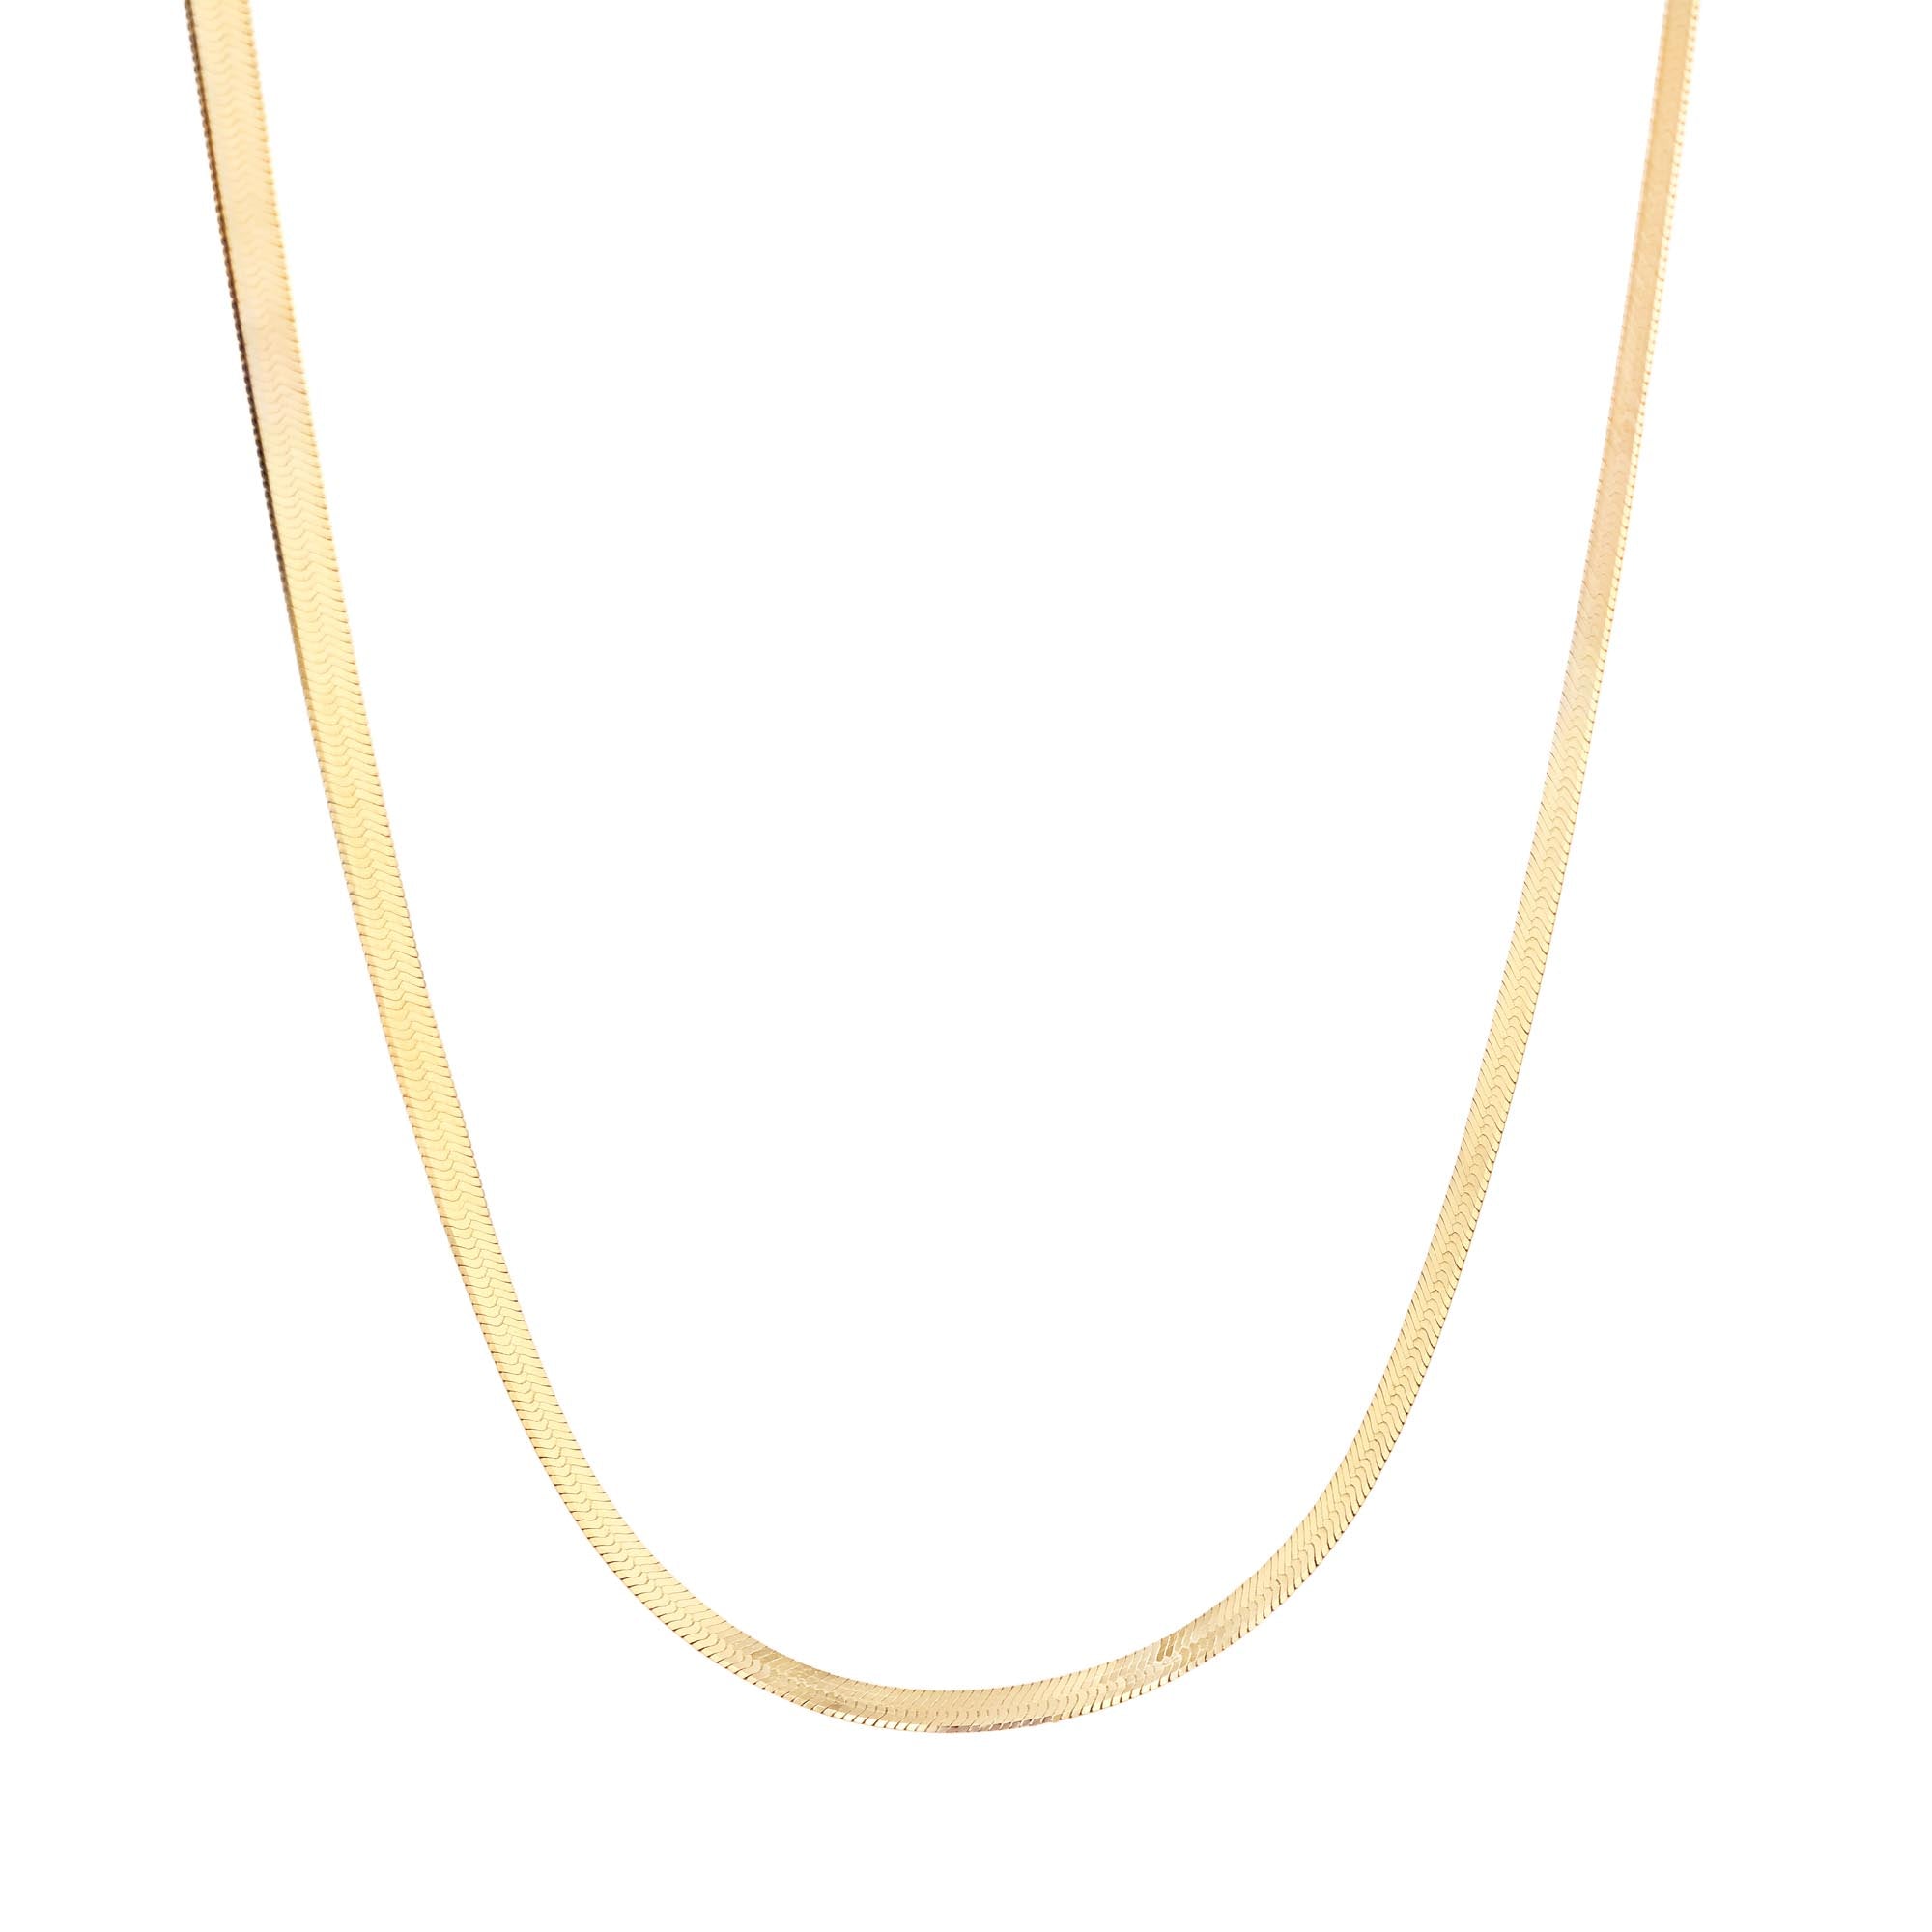 Herringbone Necklace 16in in 14K Yellow Gold|herringbone necklace in 14k yellow gold metal on 16 inch chain